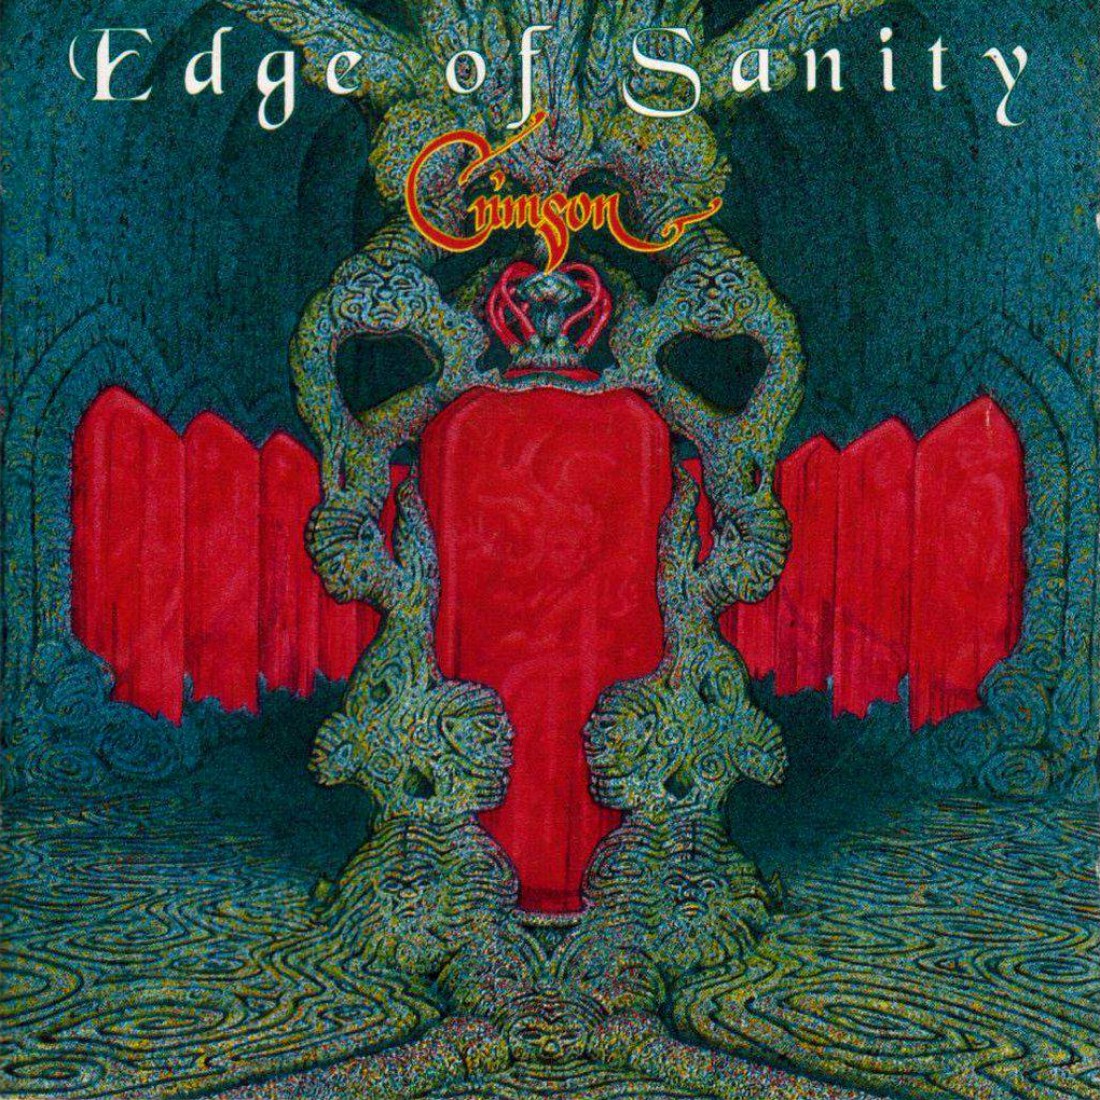 244-Edge-of-Sanity-Crimson.jpg